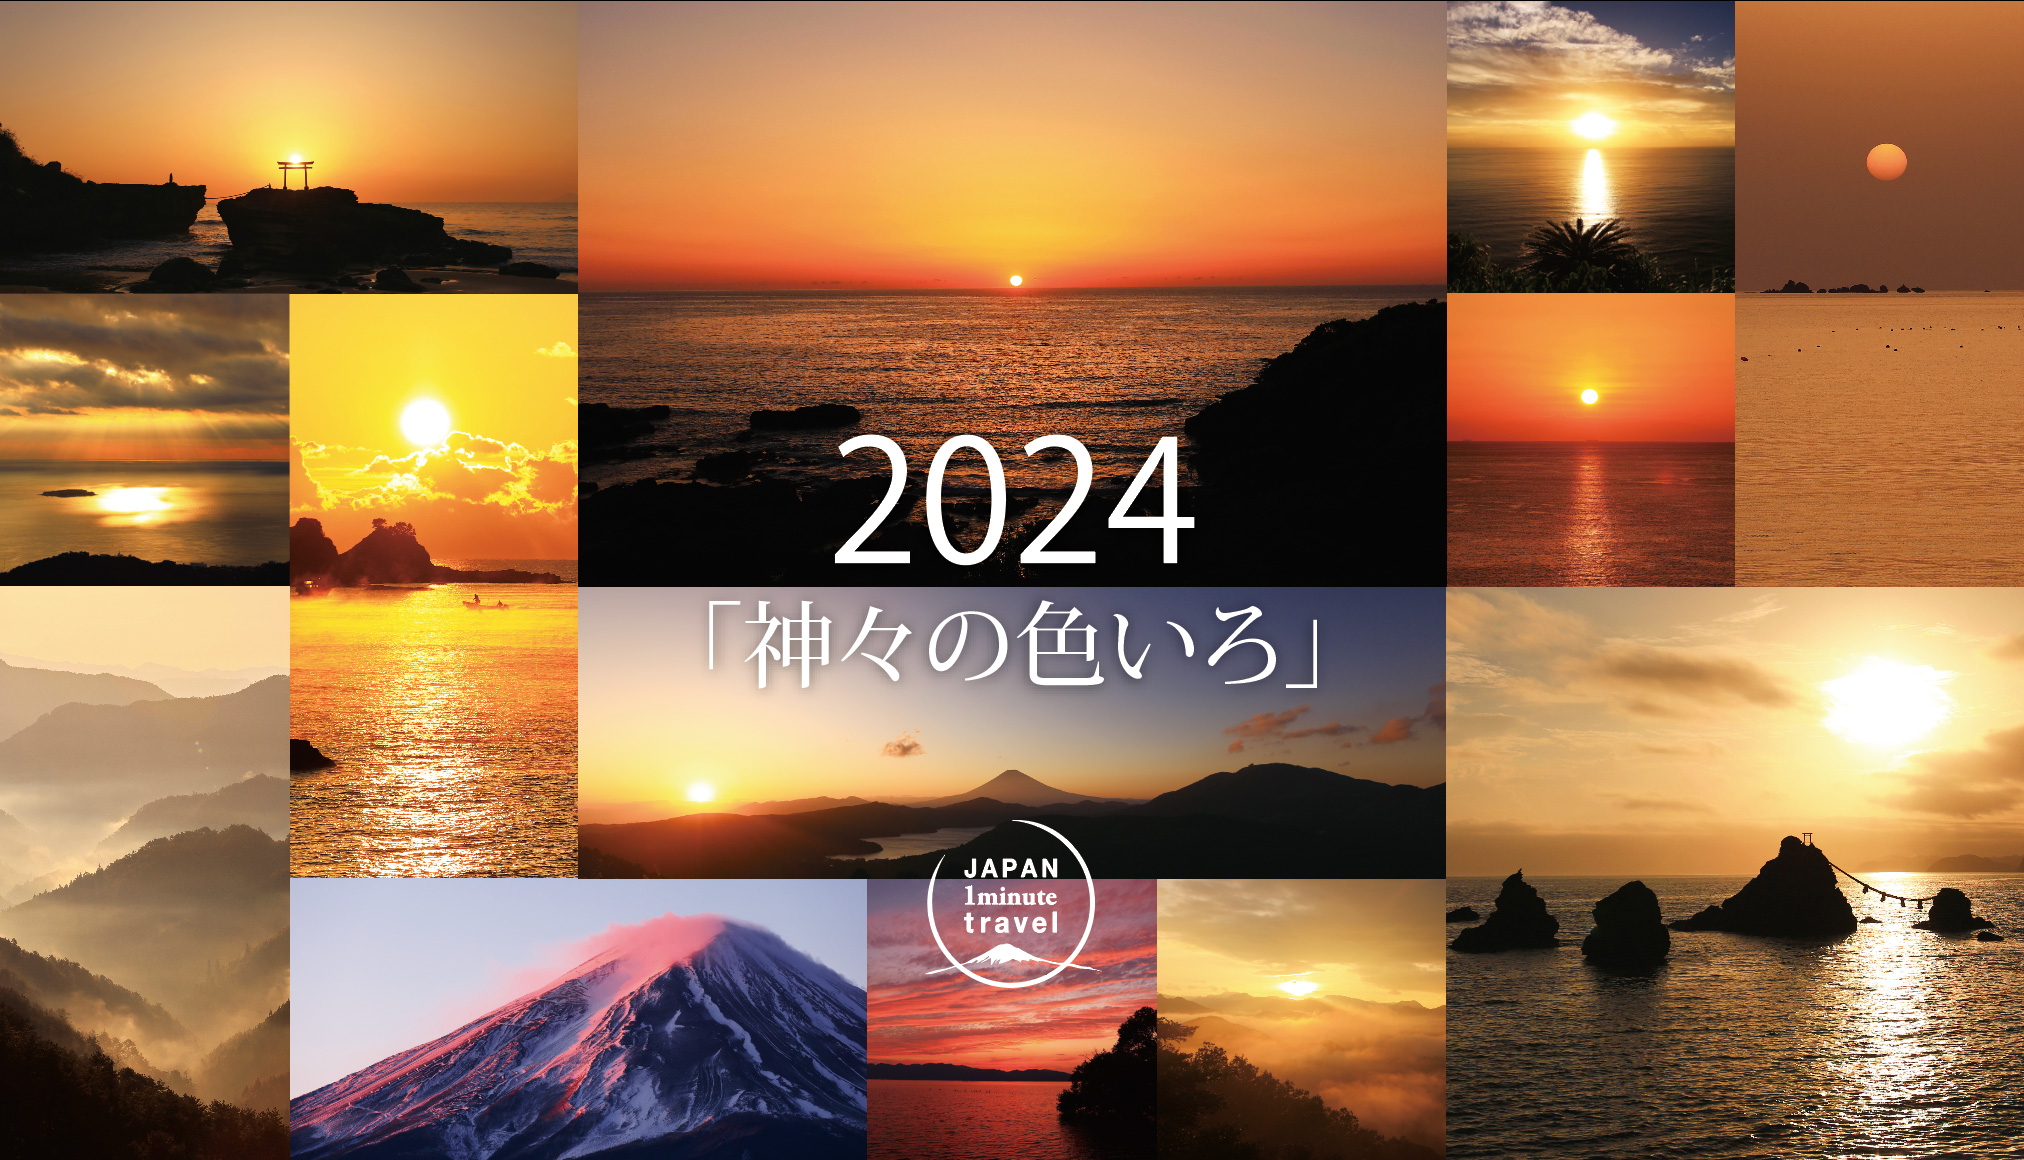 Japan 1Minute Travel「神々のいろいろ」2024年版カレンダー